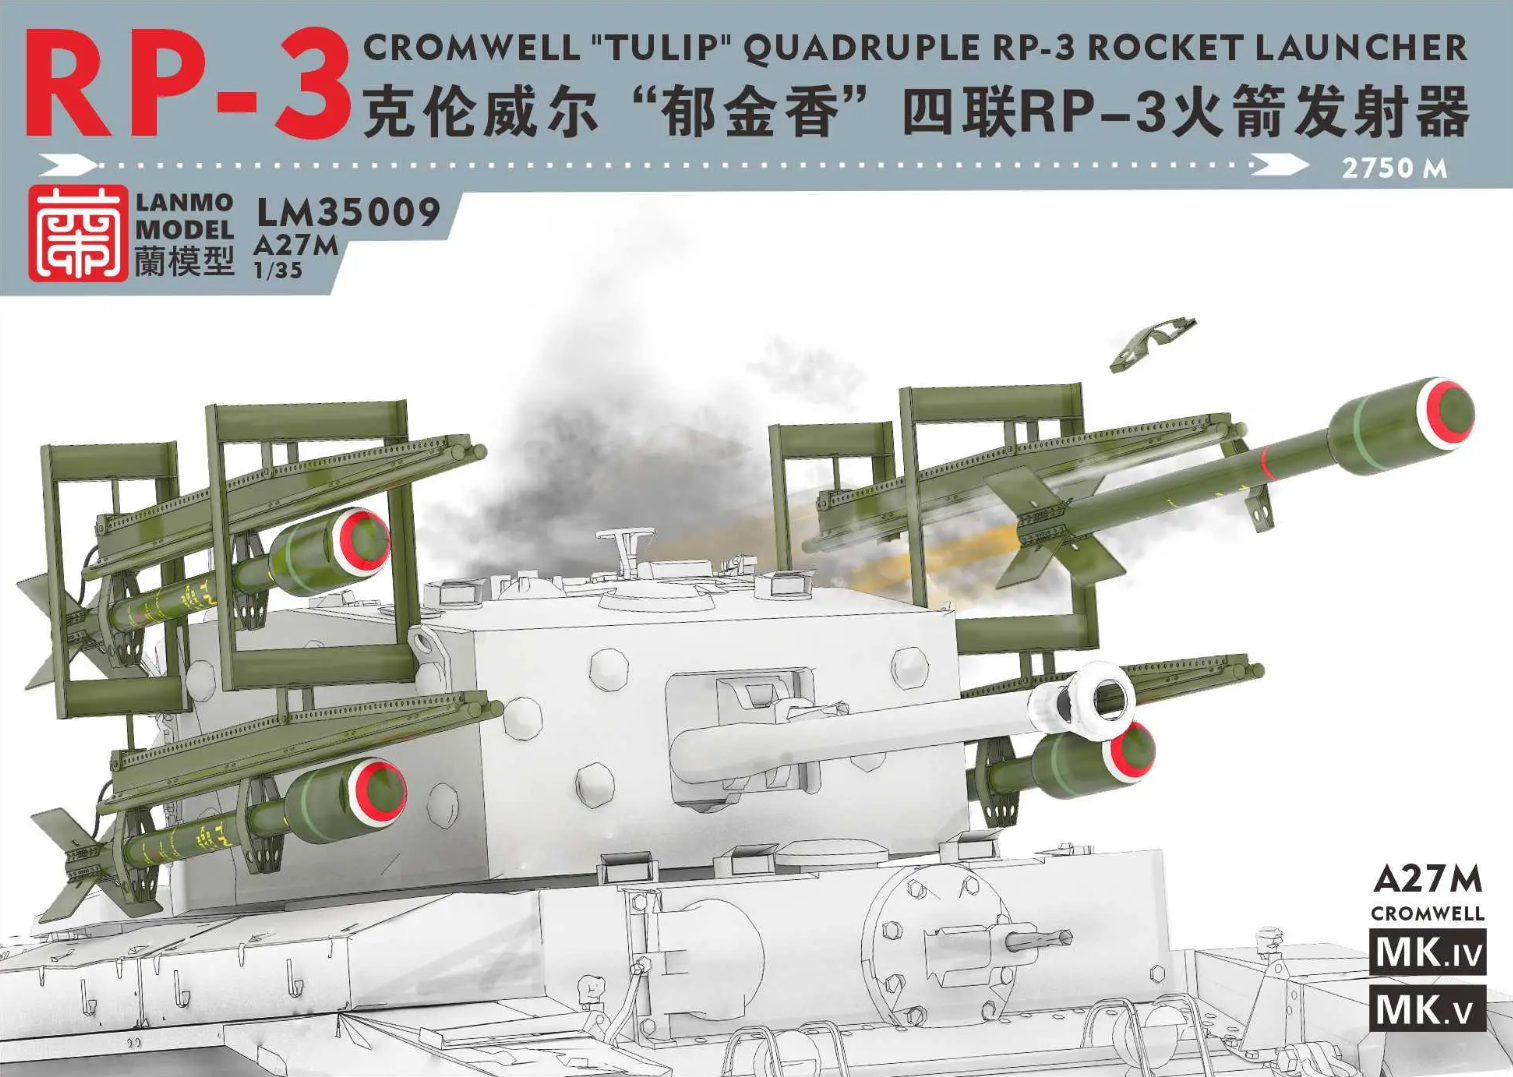 LM-35009  дополнения из металла  Cromwell "Tulip" Quadruple RP-3 Rocket Launcher  (1:35)